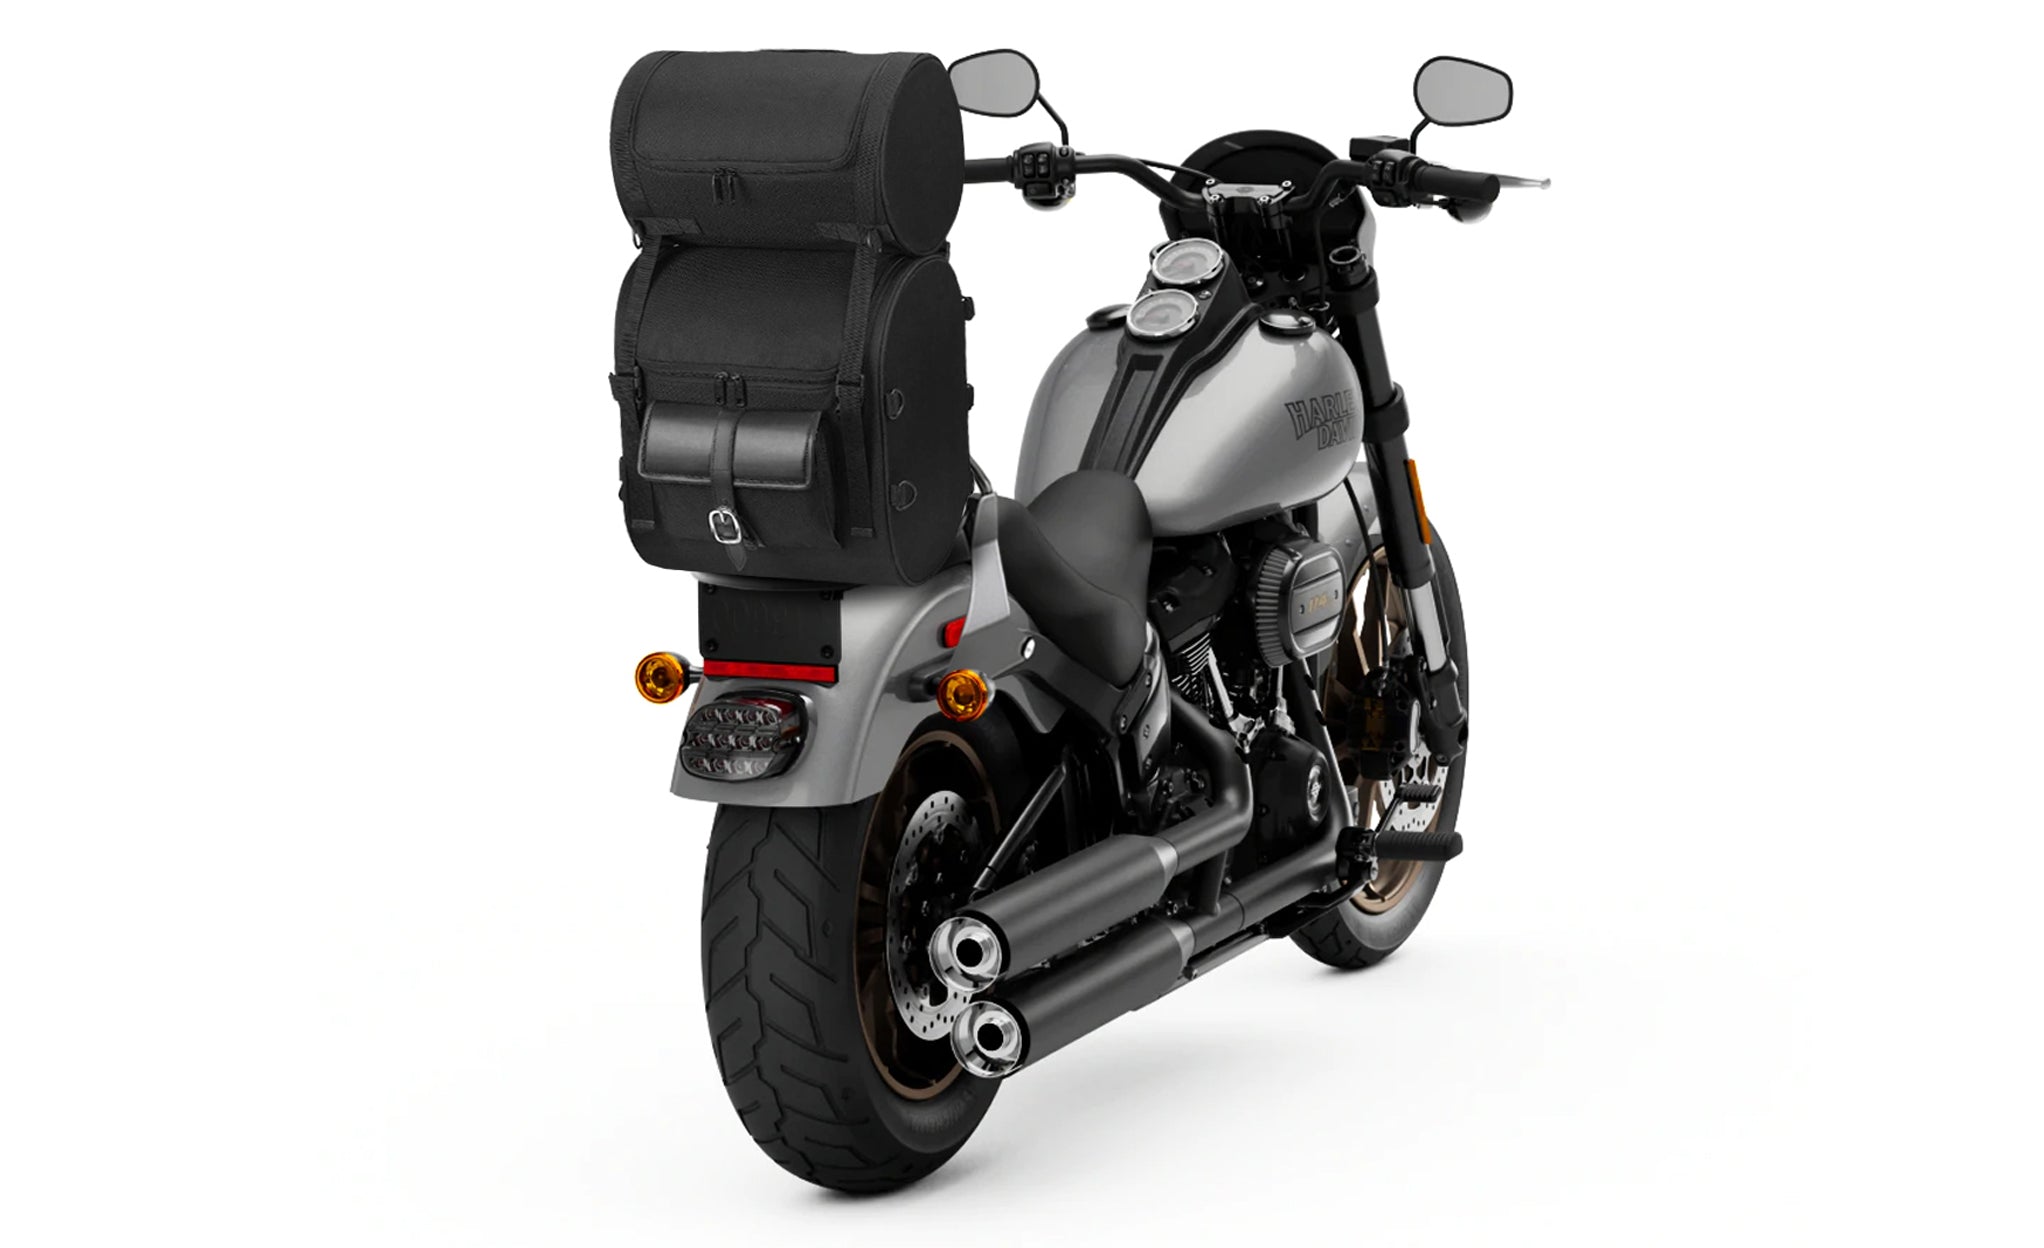 Viking Economy Line Medium Hyosung Motorcycle Sissy Bar Bag Bag on Bike View @expand